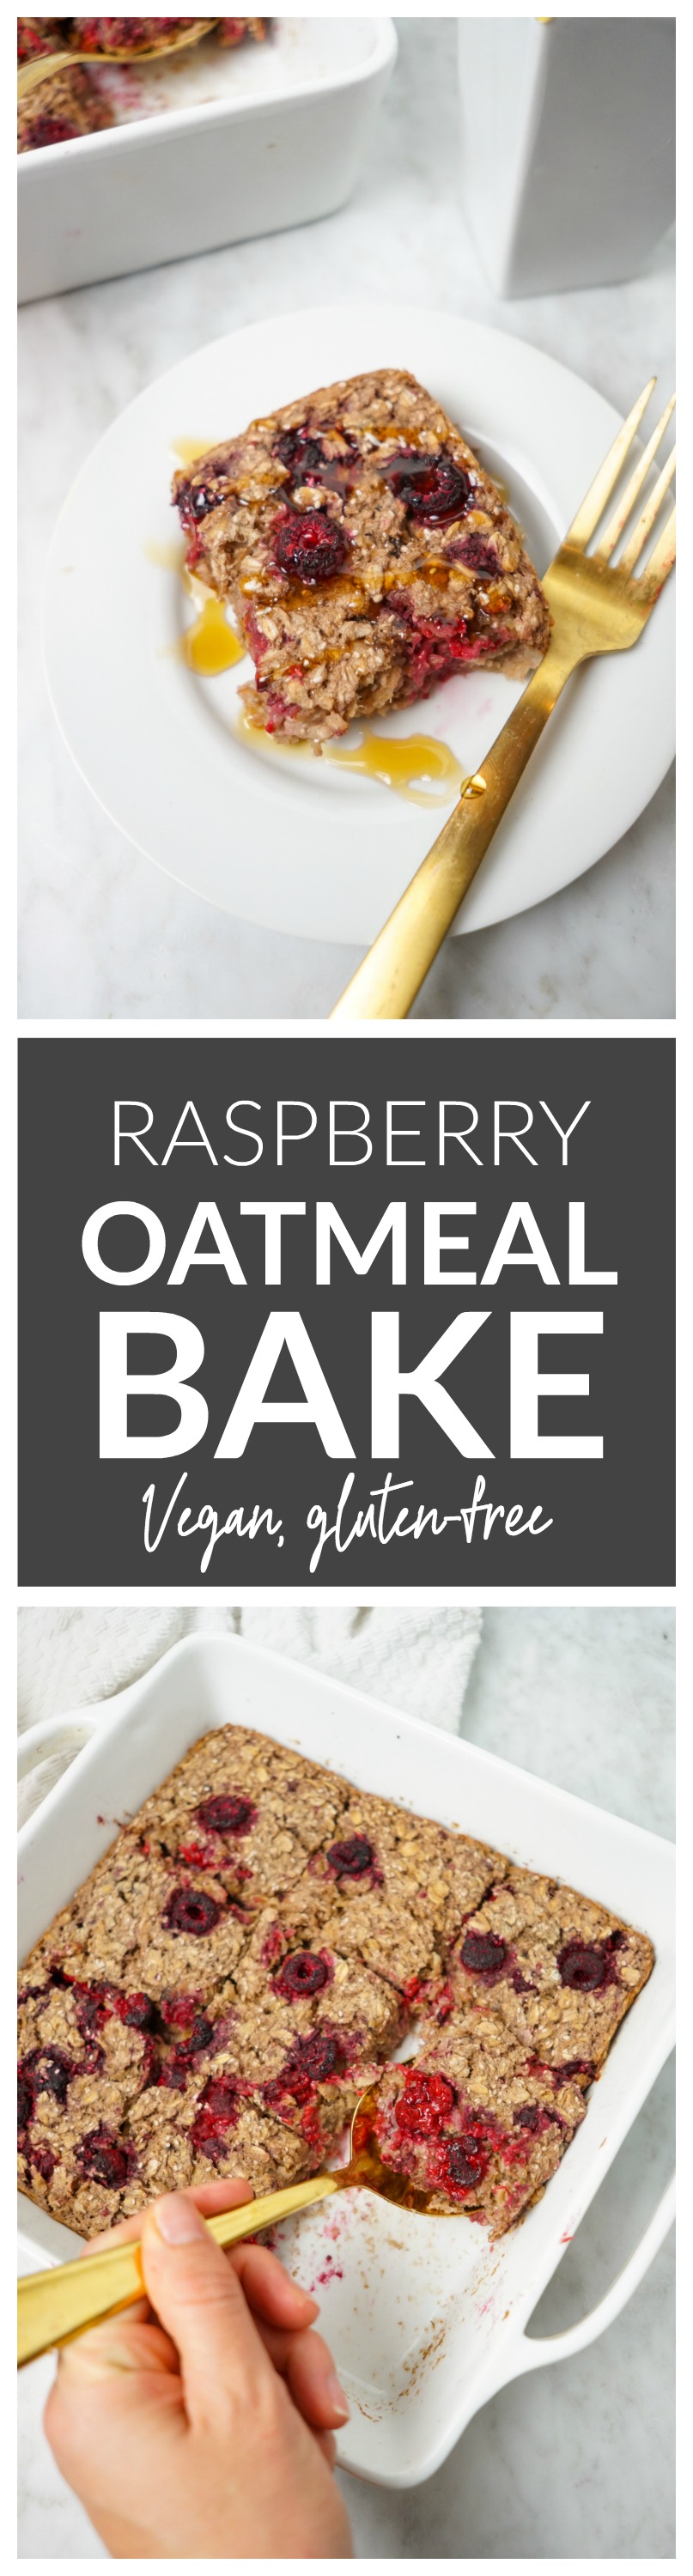 Raspberry Oatmeal Bake - vegan, gluten-free